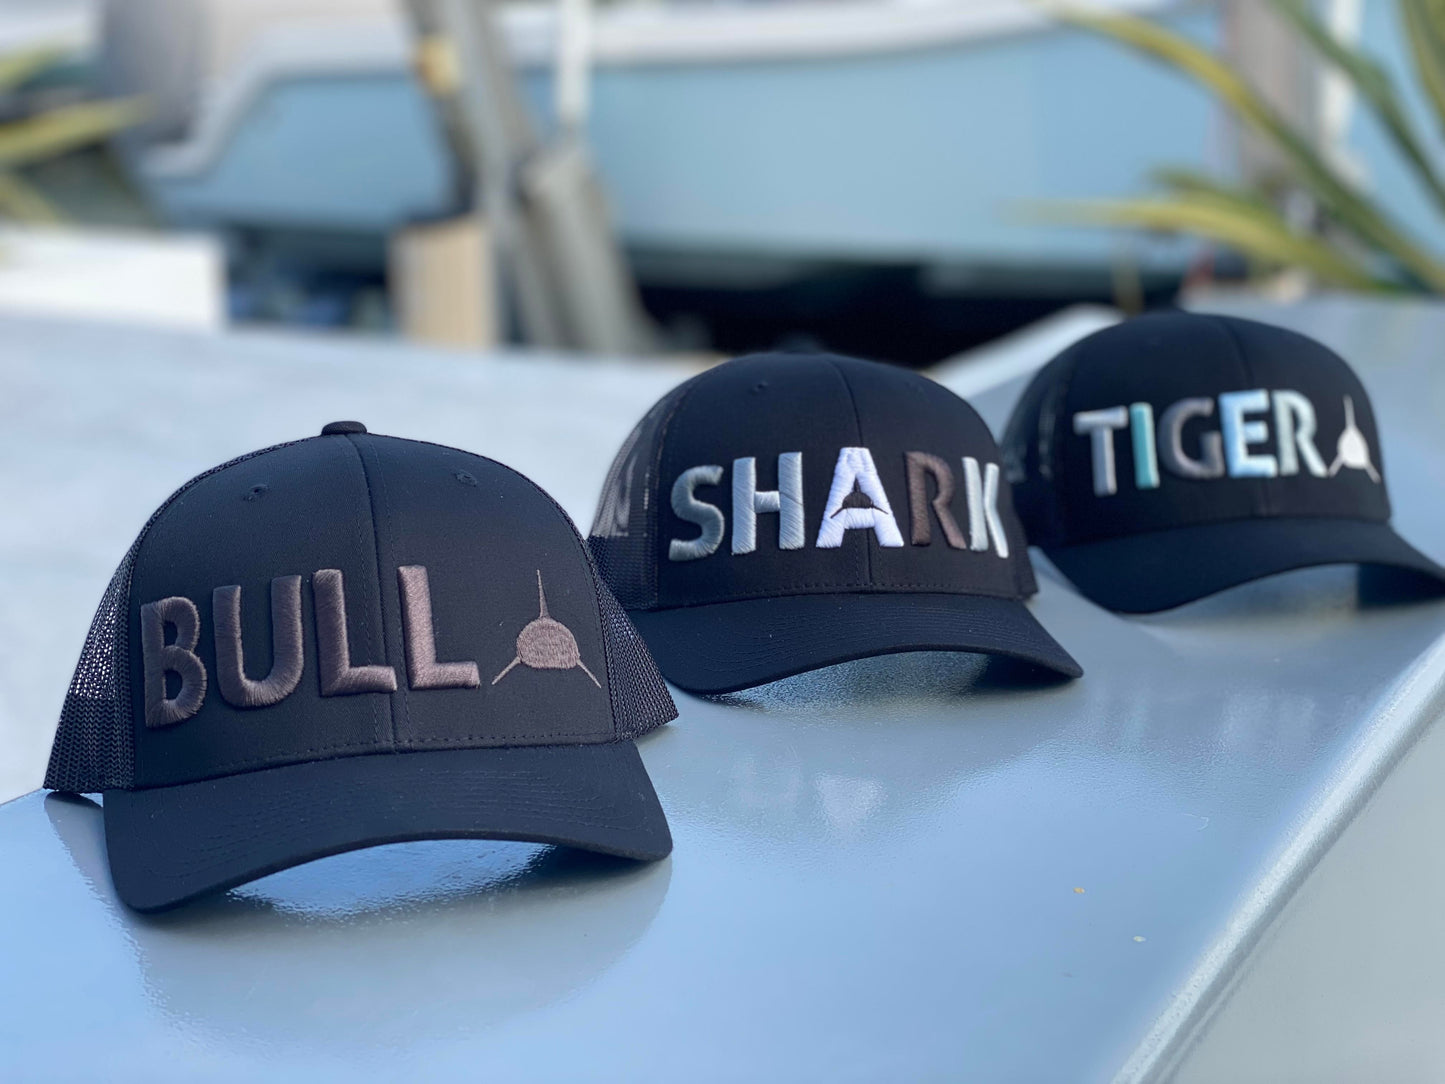 3d BULL Hat (Shark Week Limited Edition)